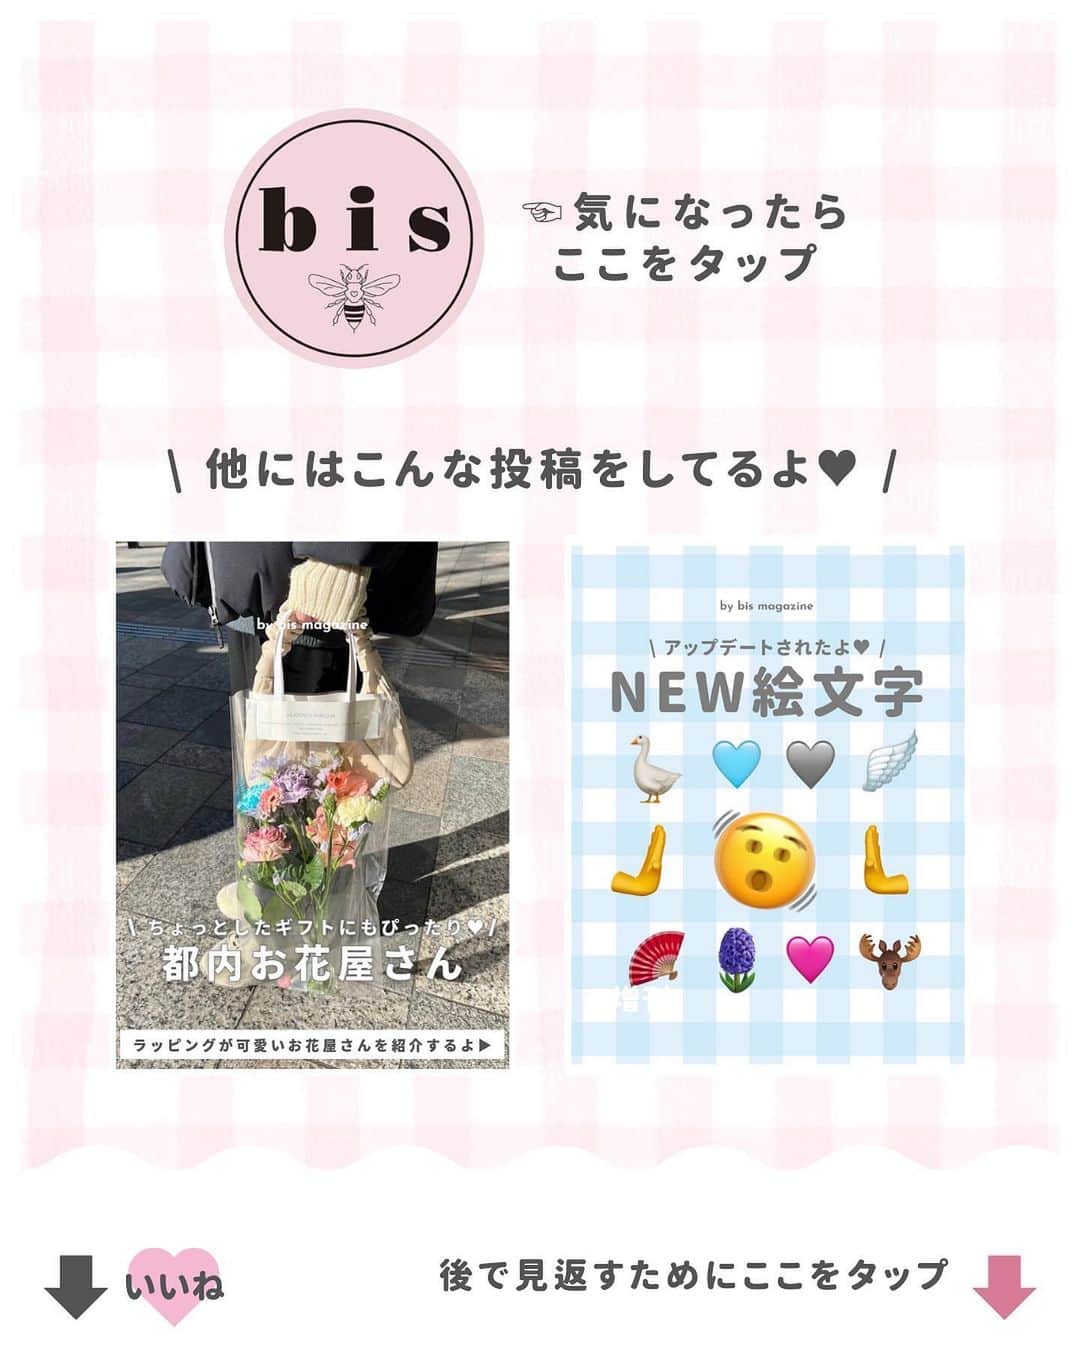 bis_web bis [ビス] さんのインスタグラム写真 - (bis_web bis [ビス] Instagram)「𓊆5/25〜𝐷𝑖𝑠𝑛𝑒𝑦 𝐵𝑙𝑢𝑒 𝐸𝑣𝑒𝑟 𝐴𝑓𝑡𝑒𝑟🩵🪽𓊇  幸せのブルーをモチーフにした 「𝐷𝑖𝑠𝑛𝑒𝑦 𝐵𝑙𝑢𝑒 𝐸𝑣𝑒𝑟 𝐴𝑓𝑡𝑒𝑟」に、 新しいアイテムが登場するよ🪻🩵  ラインナップはスワイプして𝐶ℎ𝑒𝑐𝑘🪽  ┈┈┈┈┈┈┈┈┈┈┈┈┈┈┈┈┈┈┈  🏠販売店舗 ディズニー&カンパニー @東京ディズニーランド  ベッラ・ミンニ・コレクション 東京ディズニーシー  ┈┈┈┈┈┈┈┈┈┈┈┈┈┈┈┈┈┈┈ ※5月10日時点での情報です。内容が変更になる場合があります ※メニューは品切れや金額、内容等が変更になる場合があります  #𝖽𝗂𝗌𝗇𝖾𝗒 #𝖽𝗂𝗌𝗇𝖾𝗒𝗌𝖾𝖺 #𝖽𝗂𝗌𝗇𝖾𝗒𝗅𝖺𝗇𝖽 #𝗍𝗈𝗄𝗒𝗈𝖽𝗂𝗌𝗇𝖾𝗒𝗋𝖾𝗌𝗈𝗋𝗍 #𝖽𝗂𝗌𝗇𝖾𝗒𝗀𝗋𝖺𝗆 #𝗍𝗈𝗄𝗒𝗈𝖽𝗂𝗌𝗇𝖾𝗒𝗌𝖾𝖺 #𝗍𝗈𝗄𝗒𝗈𝖽𝗂𝗌𝗇𝖾𝗒𝗅𝖺𝗇𝖽 #ディズニー #ディズニーフード #ディズニーコーデ #ディズニーランド #ディズニーシー #ディズニーグッズ #ディズニーグルメ #ダッフィーコーデ #ダッフィー #ダッフィーグッズ#ダッフィーフレンズ#duffy #duffyandfriends #東京ディズニーリゾート #パークフード #ディズニーリゾート #ディズニー写真部 #東京ディズニーランド #東京ディズニーシー #𝖽オタさんと繋がりたい #ディズニー部 #ディズニー好きと繋がりたい #bis_web」5月23日 18時58分 - bis_web